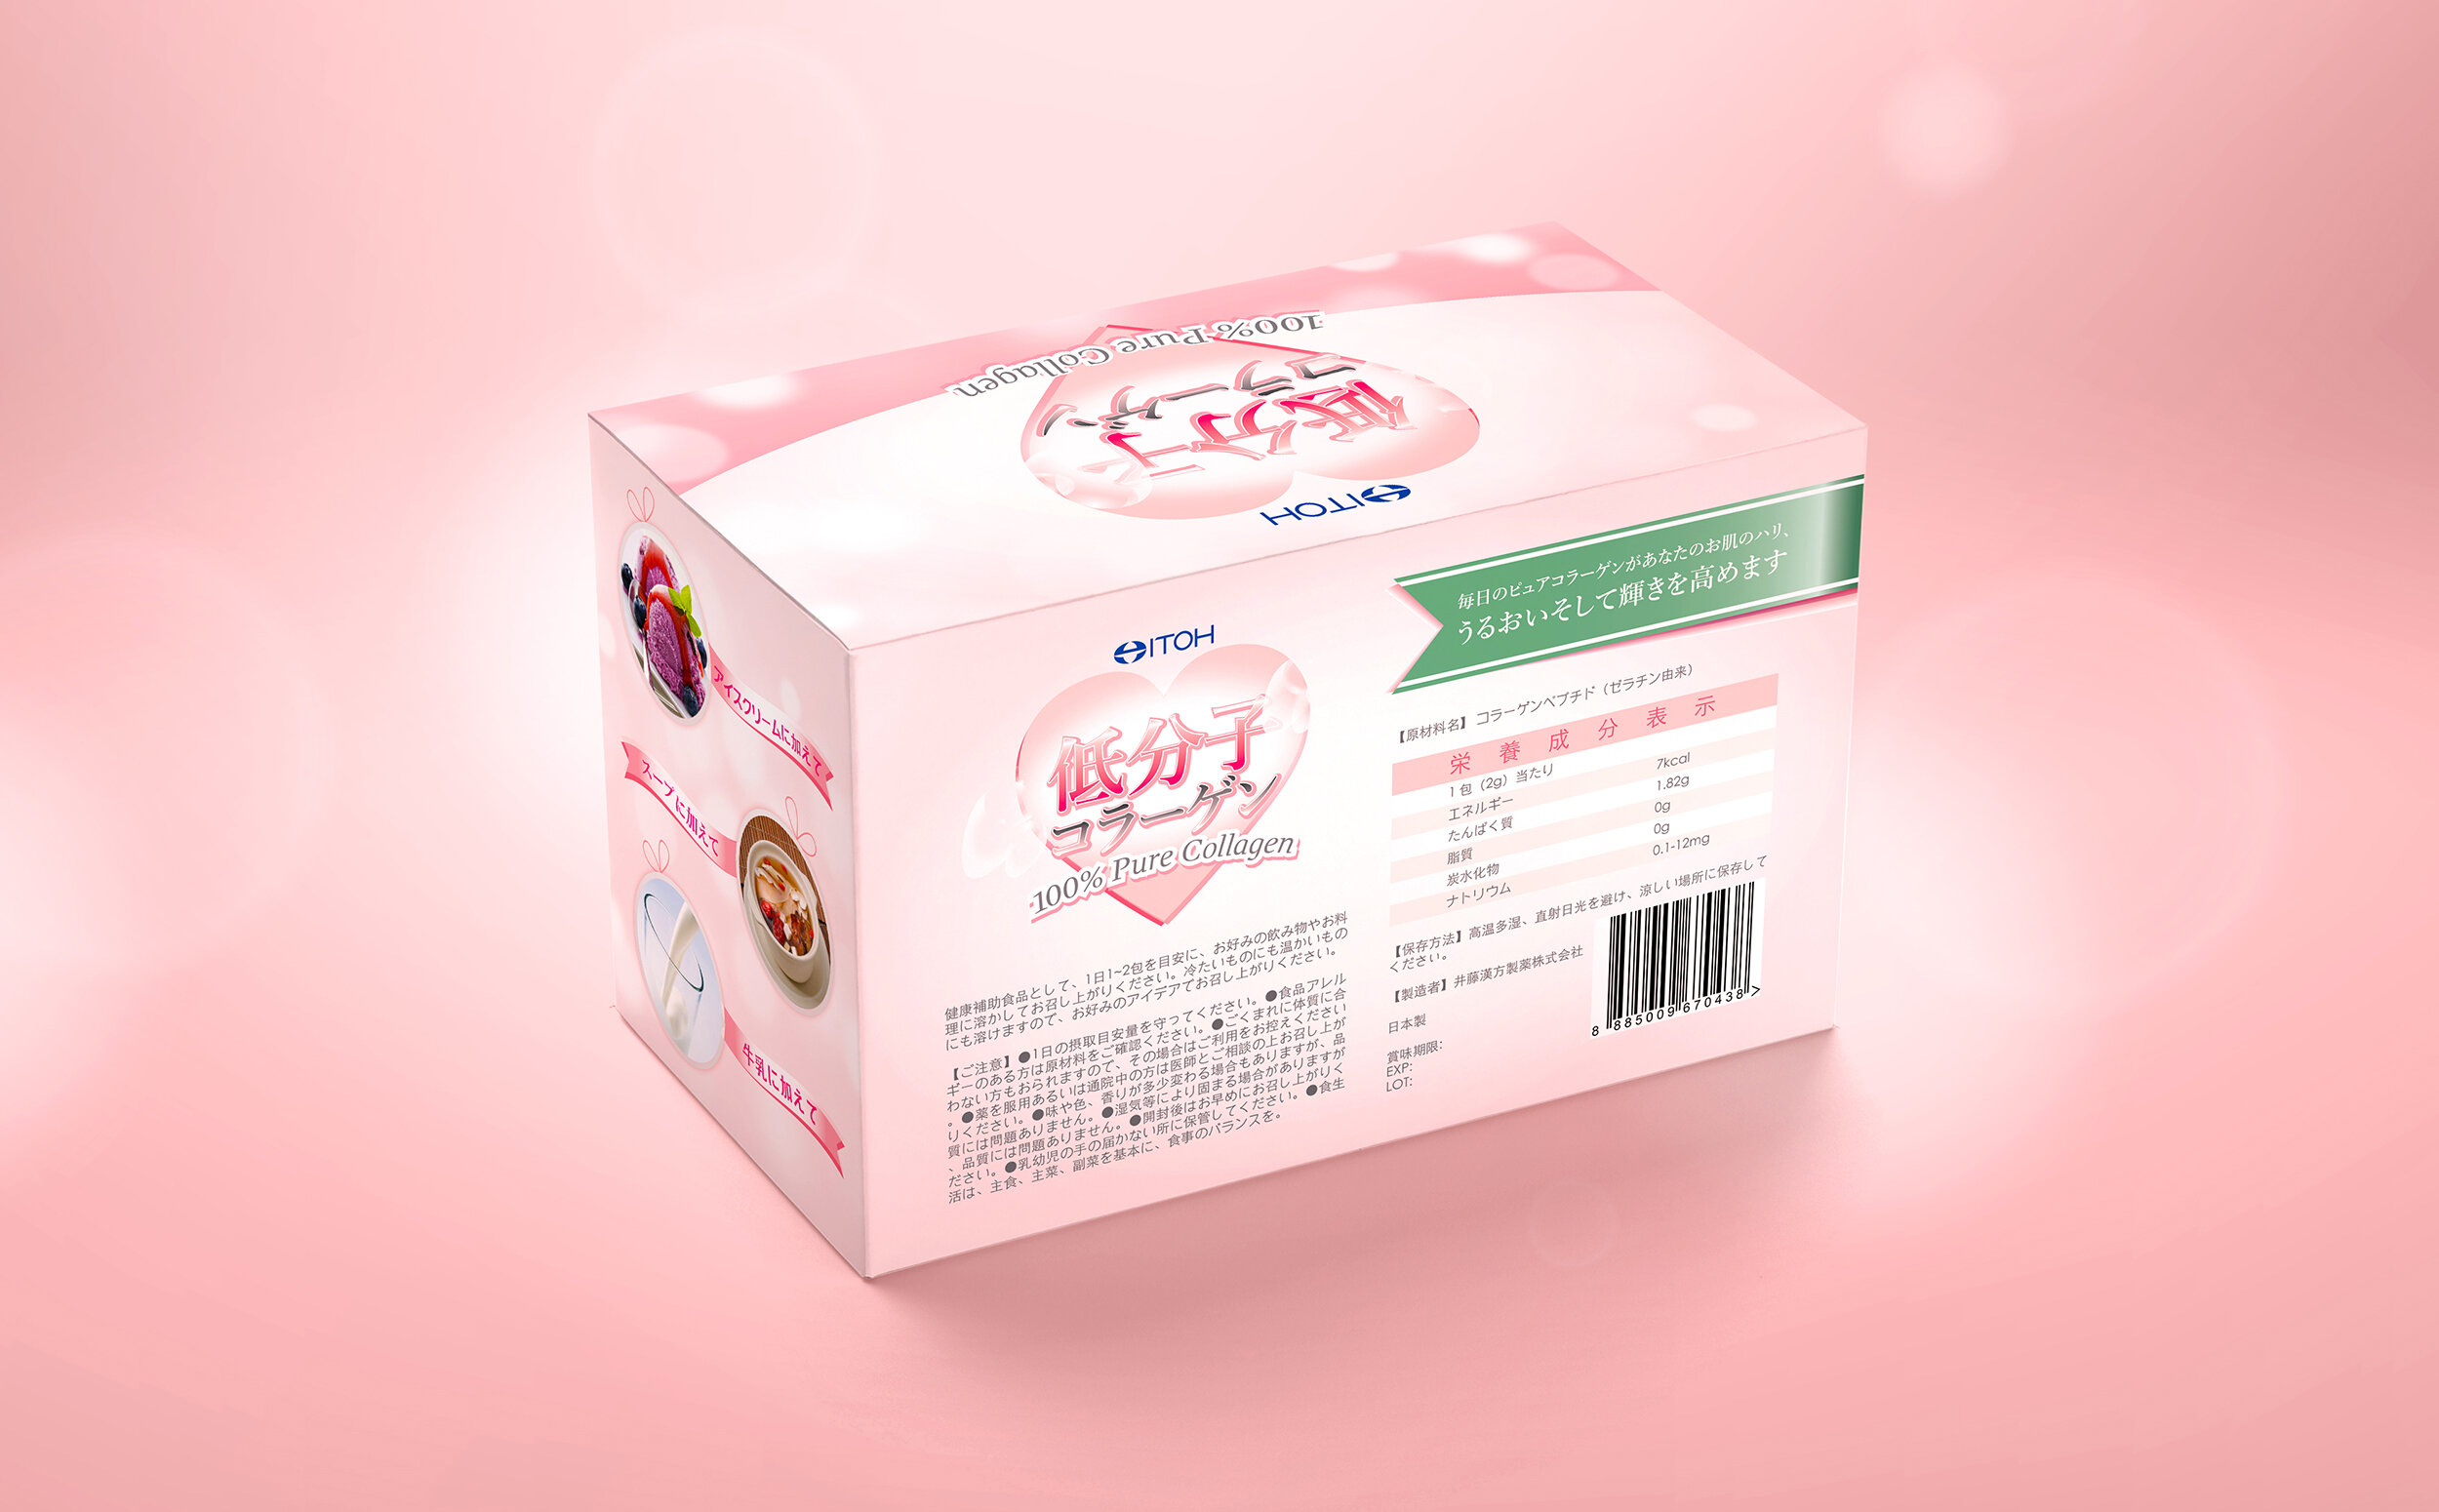 Ascen Resources 28 Days ITOH Collagen Packaging Box (Packaging Design by YANA Singapore Freelance Designer).jpg